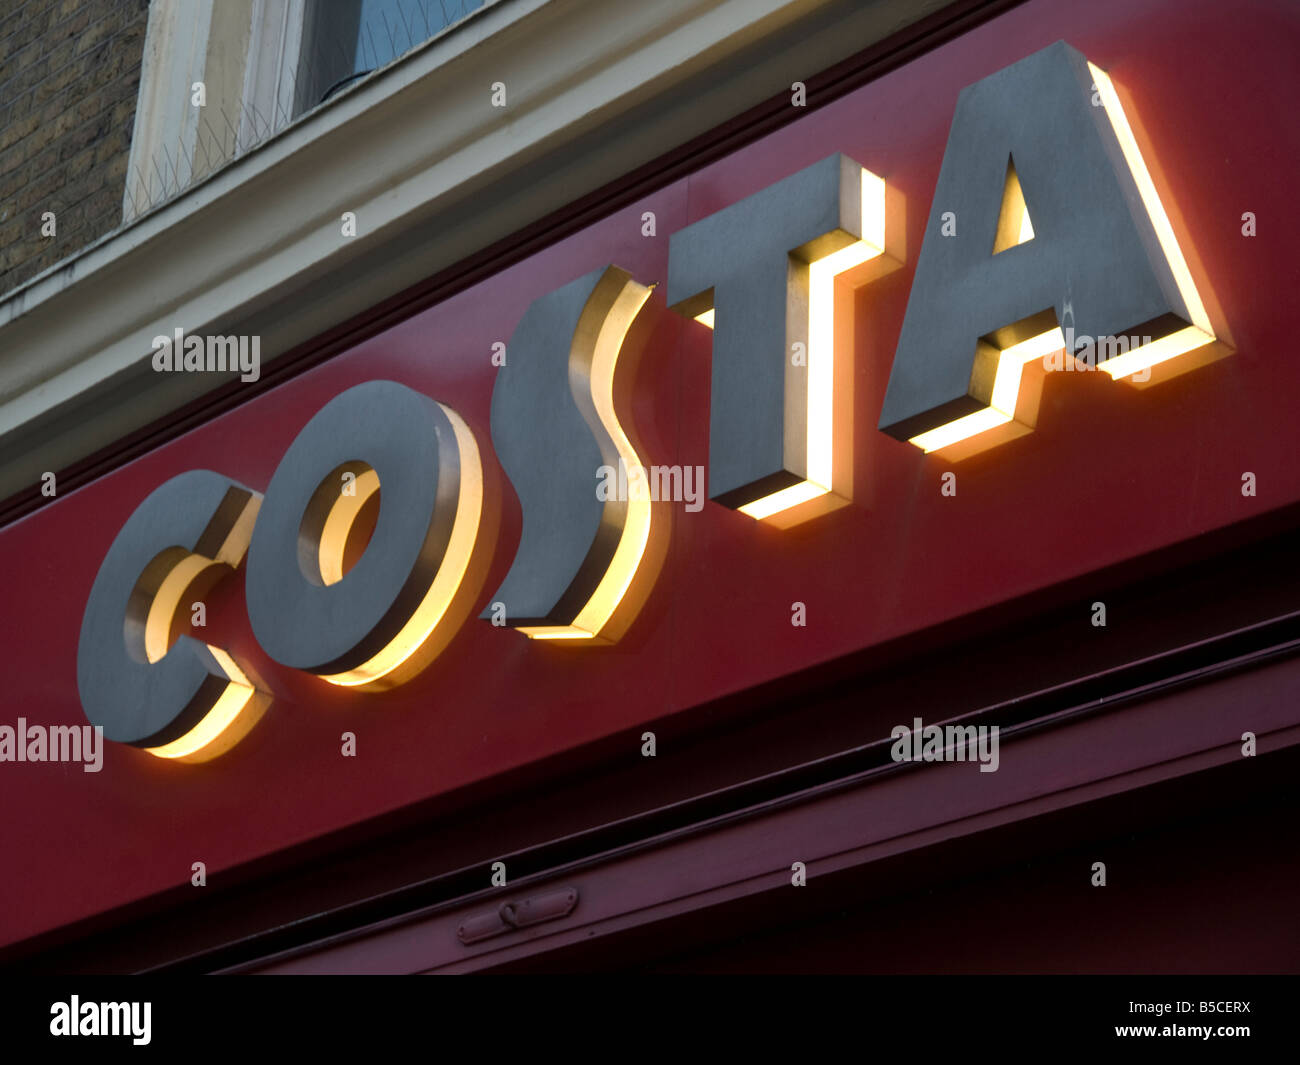 Illuminated Costa coffee shop sign Stock Photo